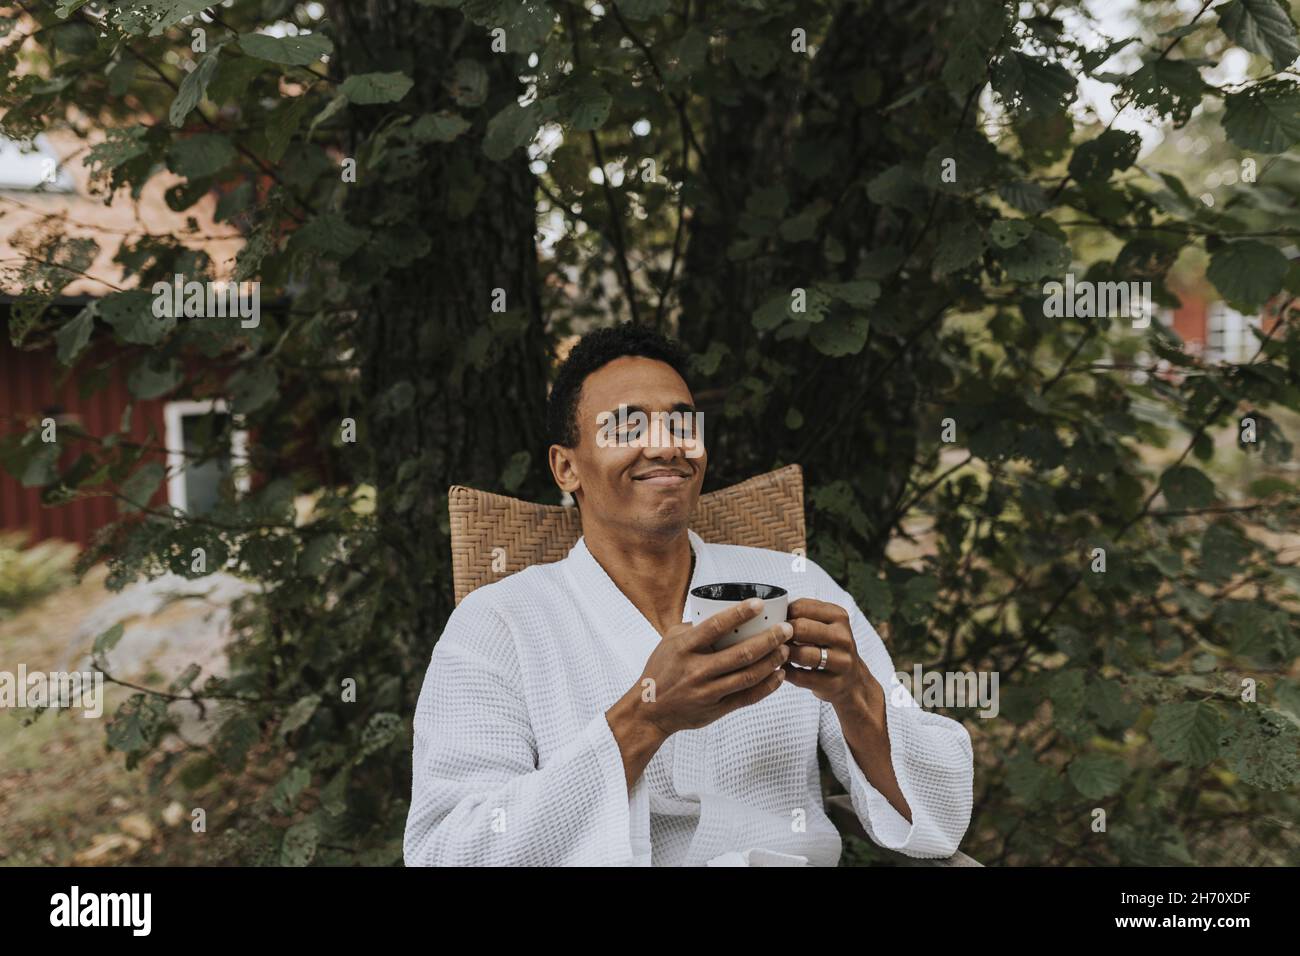 Smiling man having coffee in garden Stock Photo